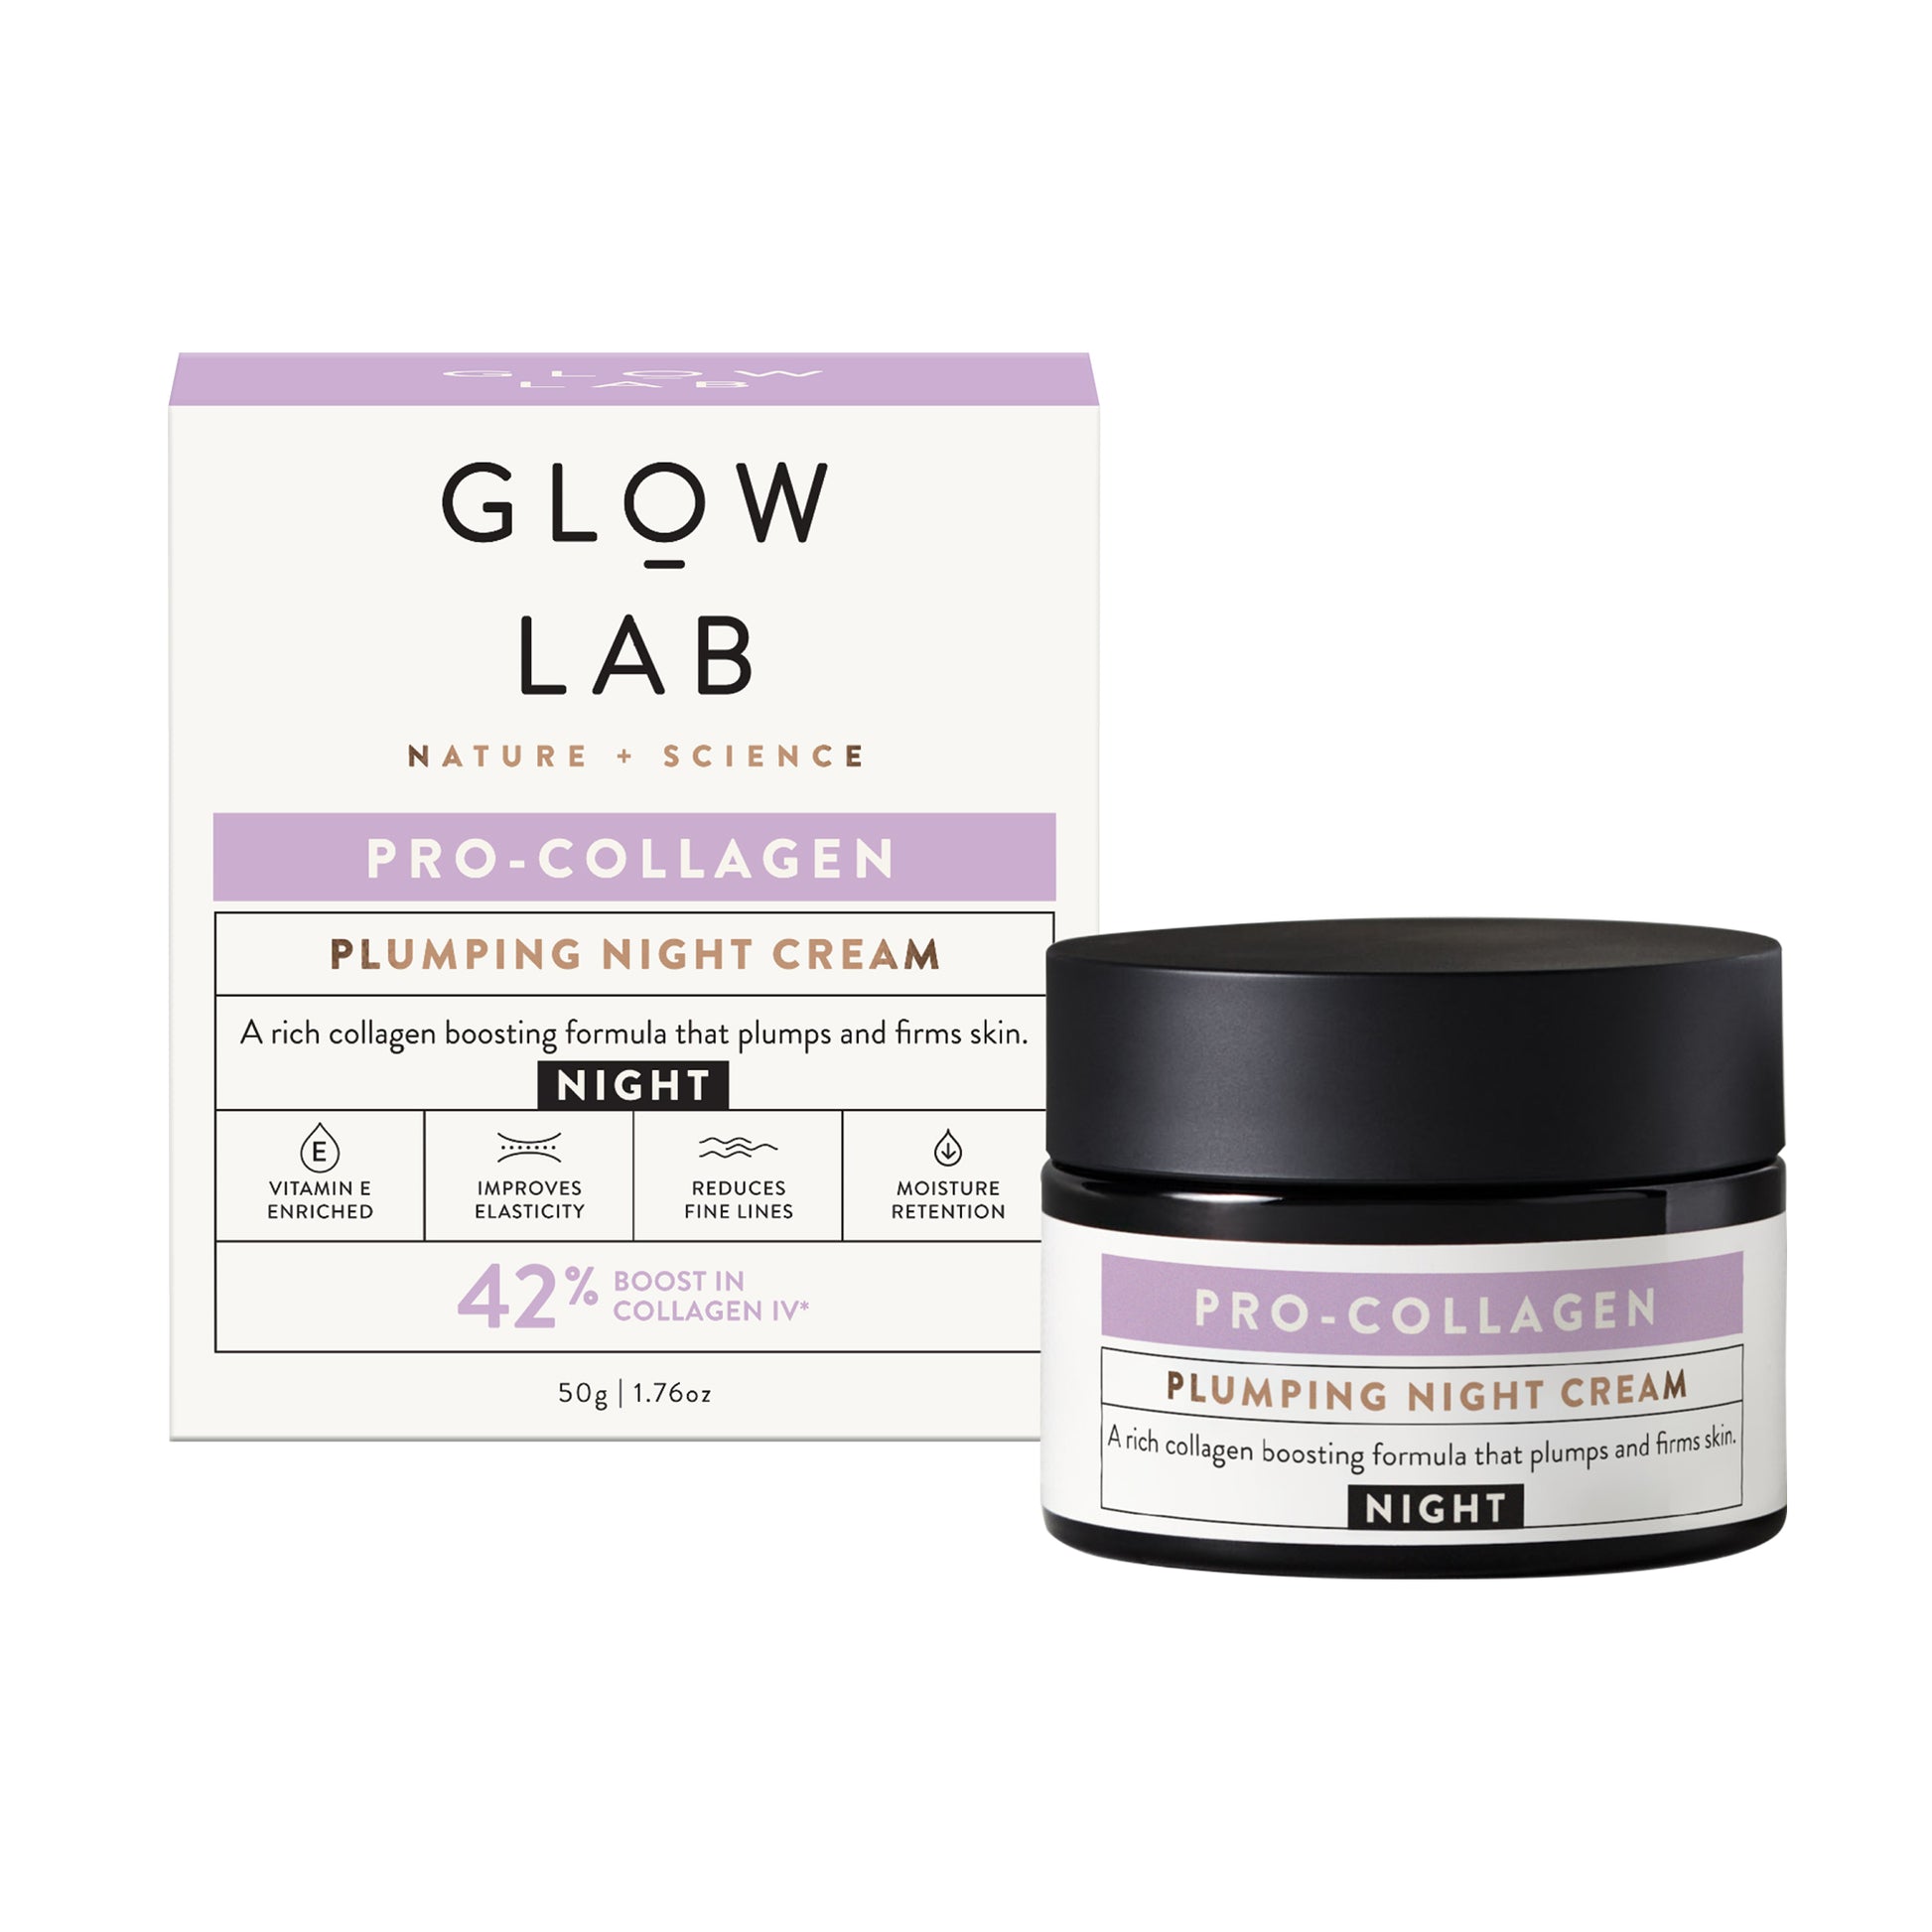 Pro-Collagen Plumping Night Cream - Glow Lab | MLC Space